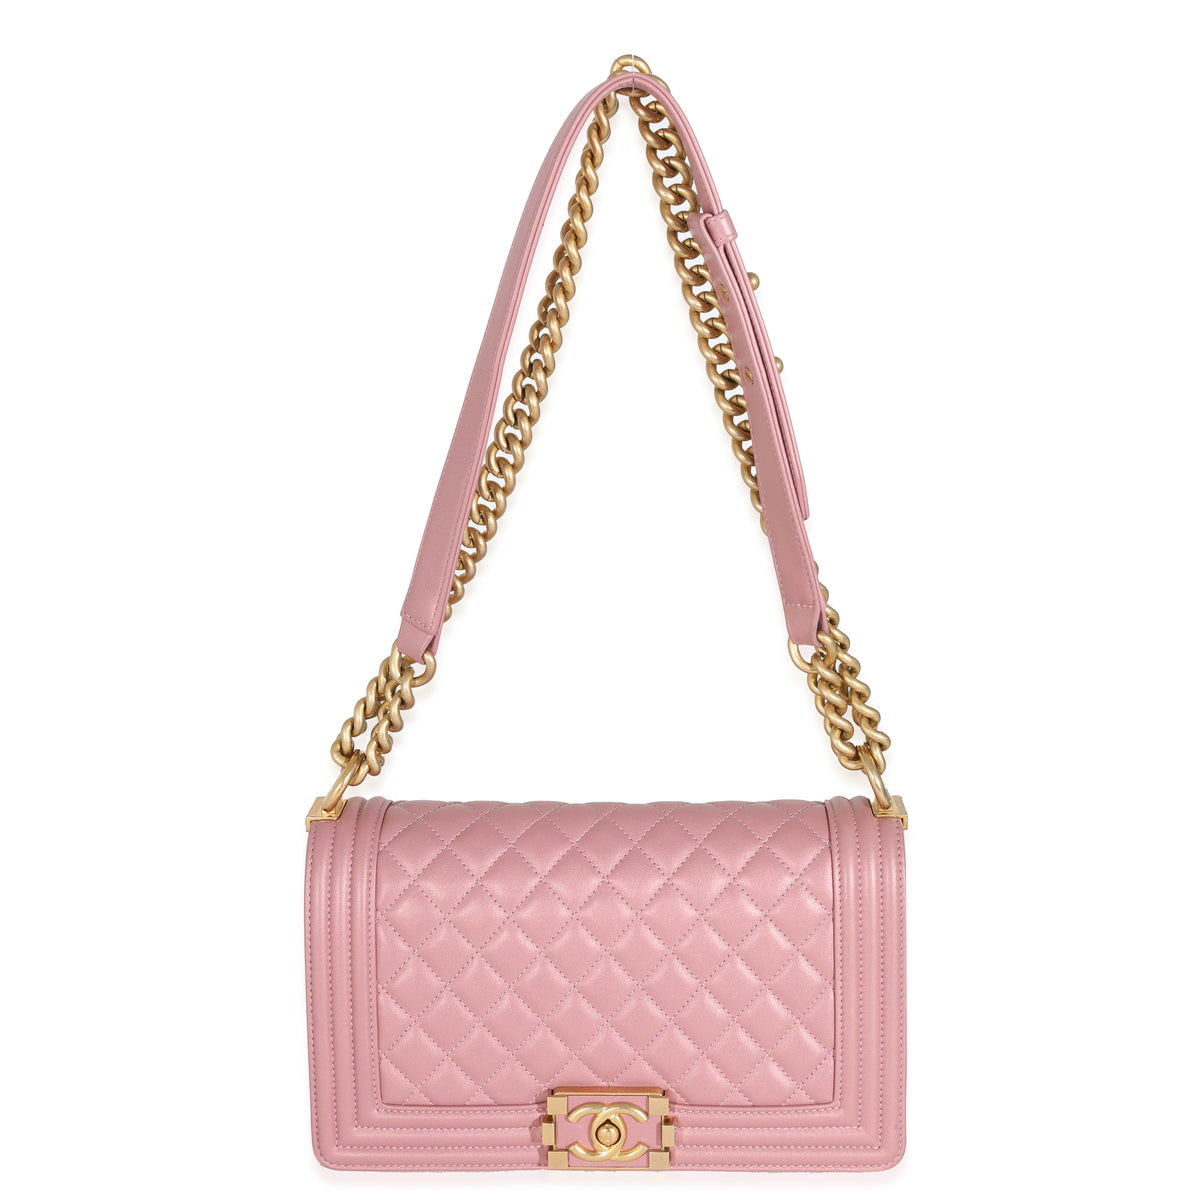 Chanel Metallic Pink Calfskin Medium Boy Bag